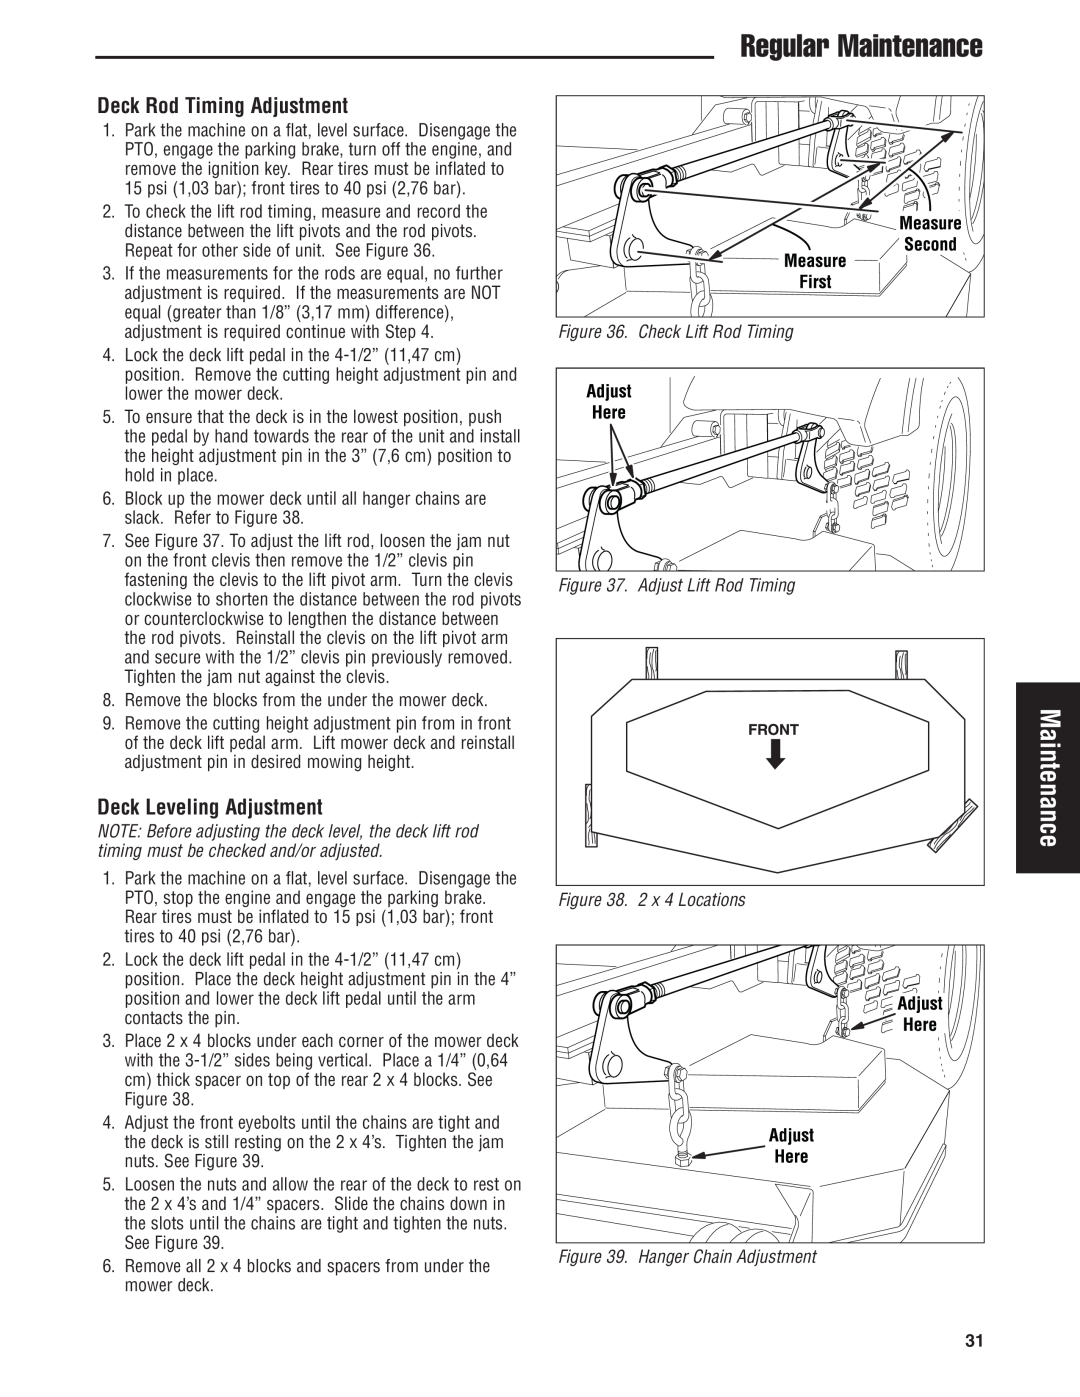 Snapper 500Z manual Regular Maintenance, Deck Rod Timing Adjustment, Deck Leveling Adjustment, Adjust Lift Rod Timing 